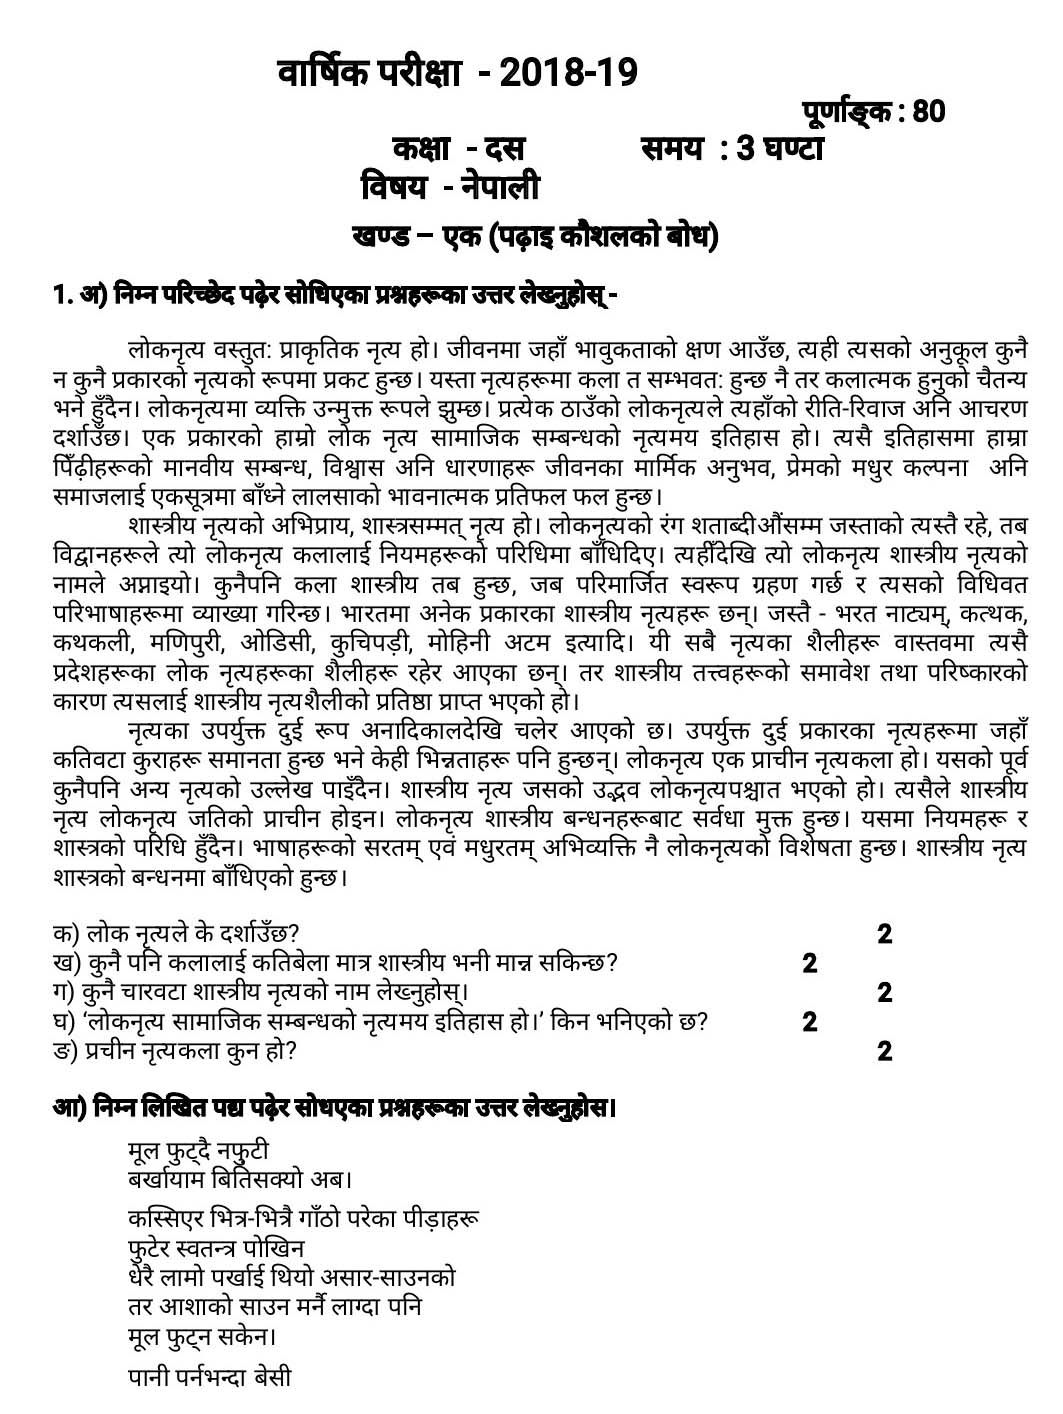 Nepali CBSE Class X Sample Question Paper 2018-19 - Image 1